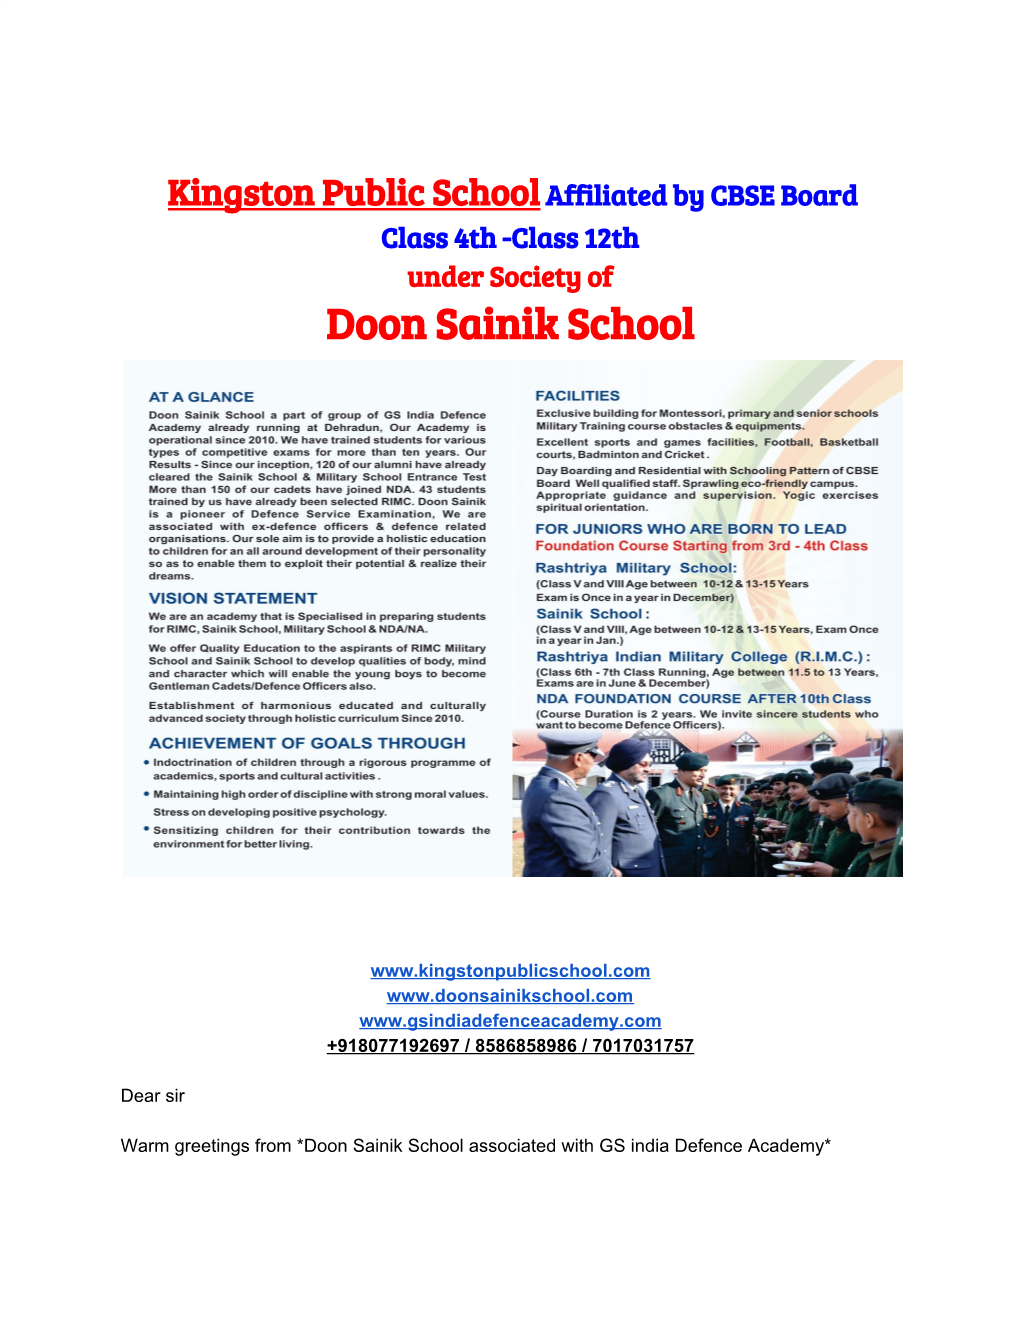 Class 12Th Under Society of Doon Sainik School